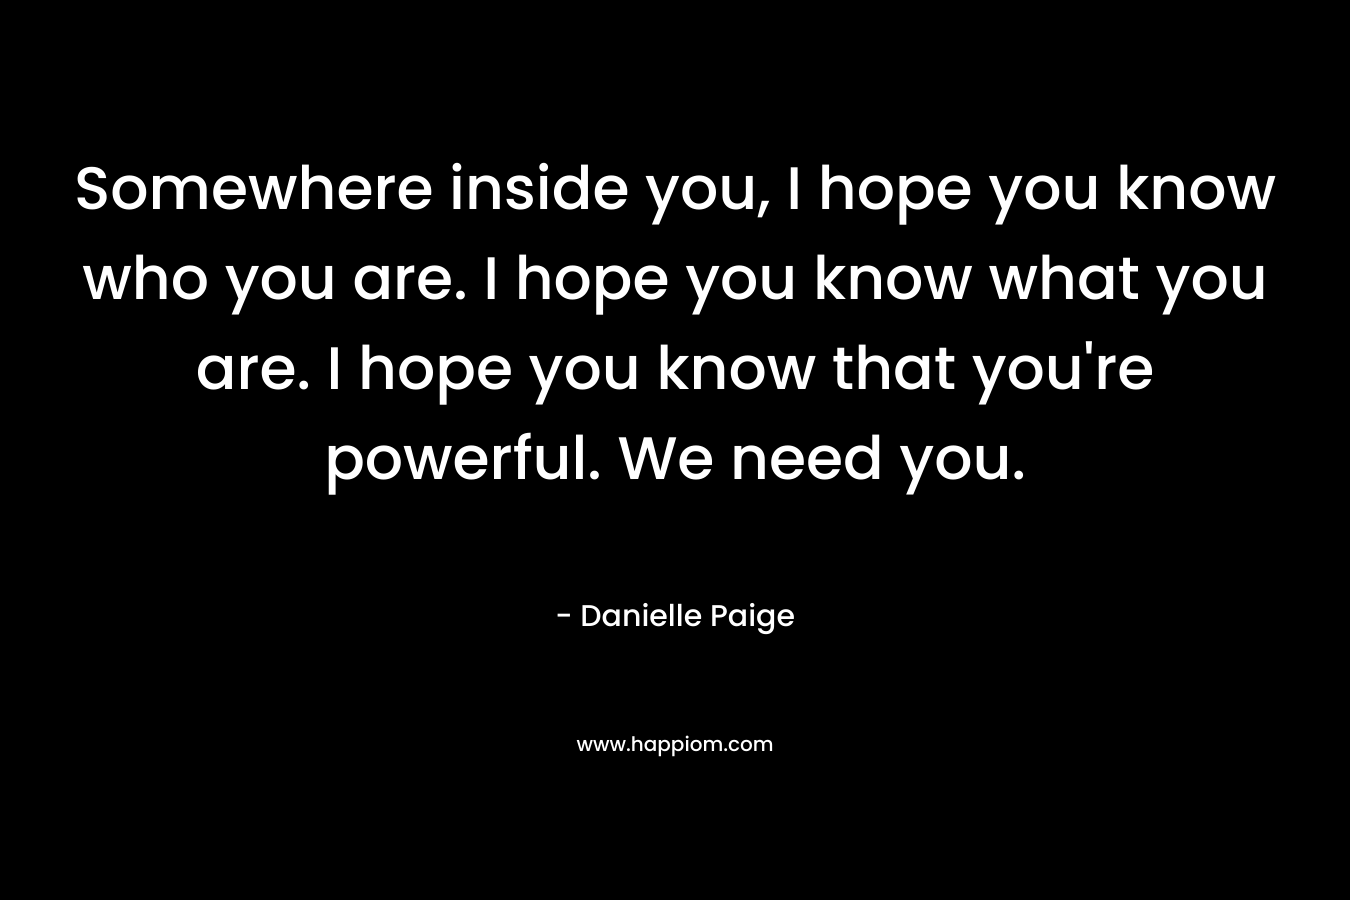 Somewhere inside you, I hope you know who you are. I hope you know what you are. I hope you know that you're powerful. We need you.